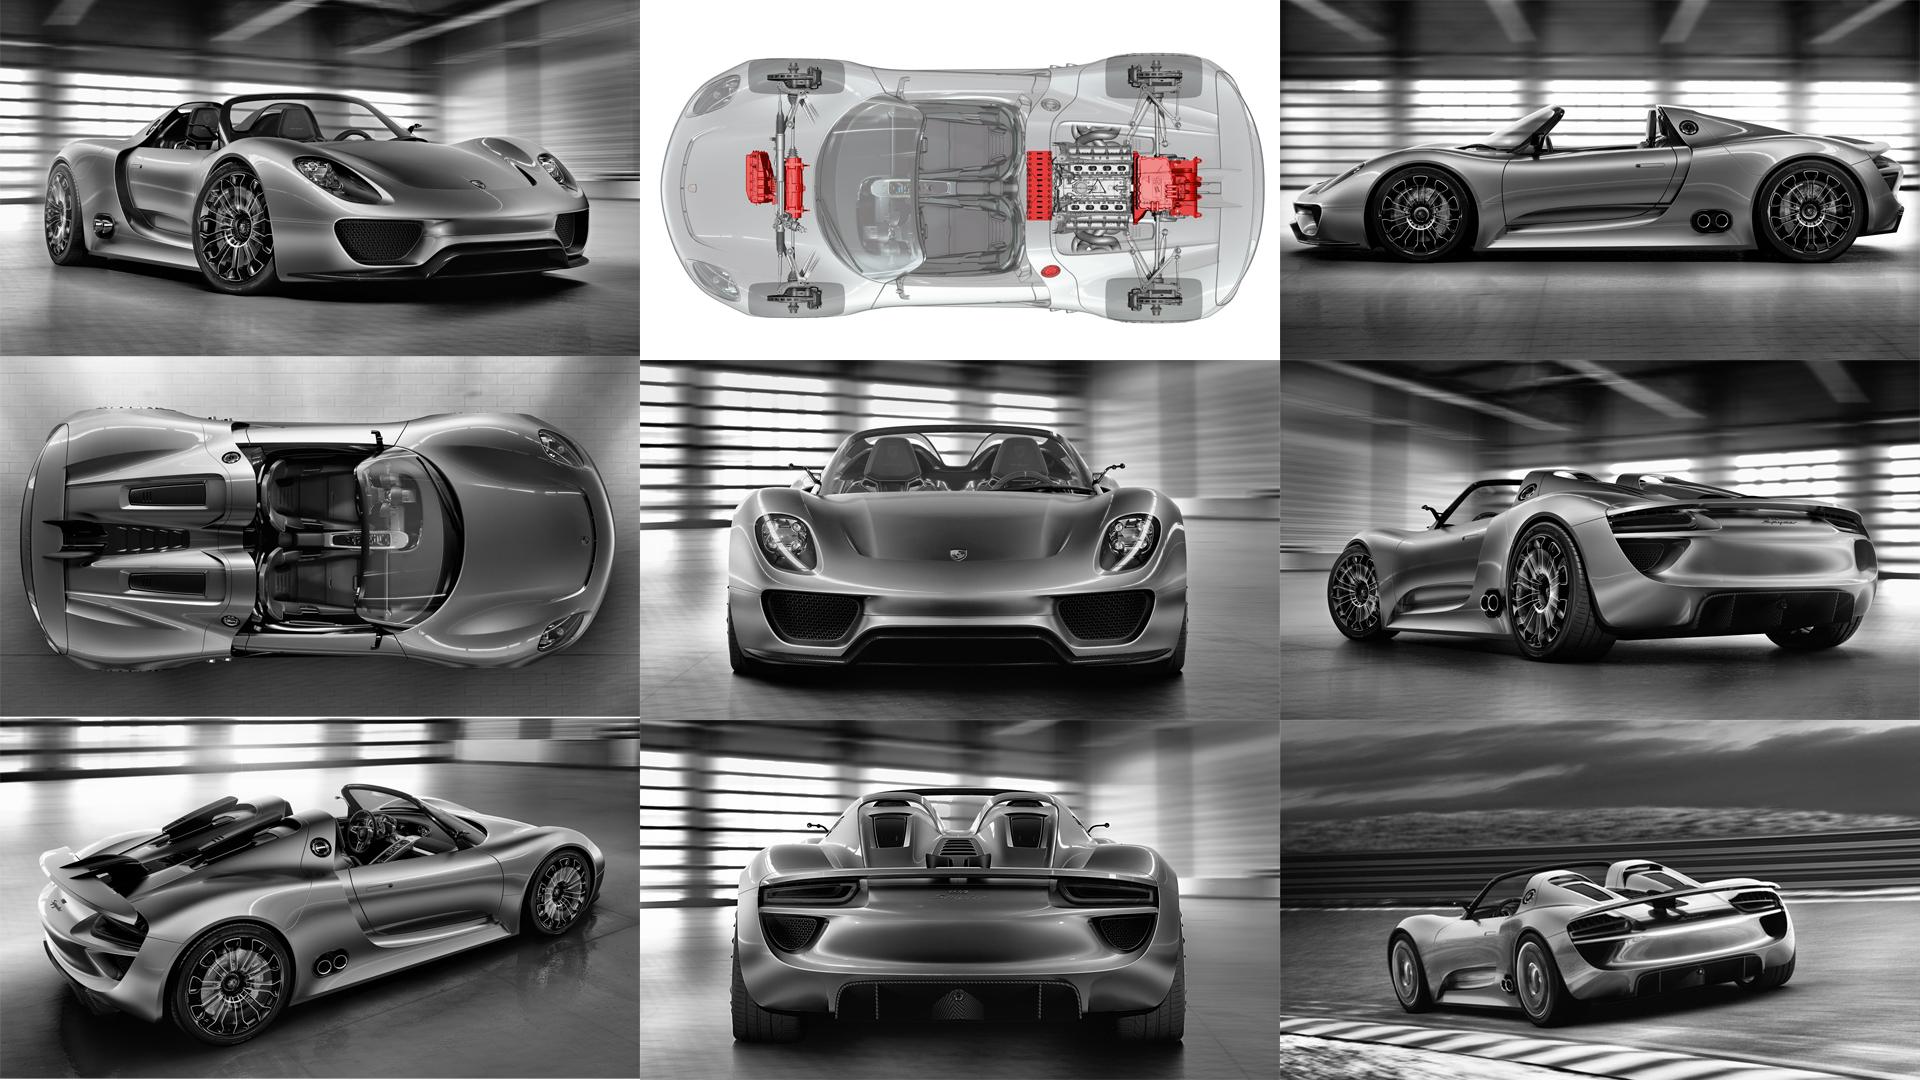 Porsche's stunning 918 Spyder Hybrid Concept - 500bhp V8 + 215 bhp electric